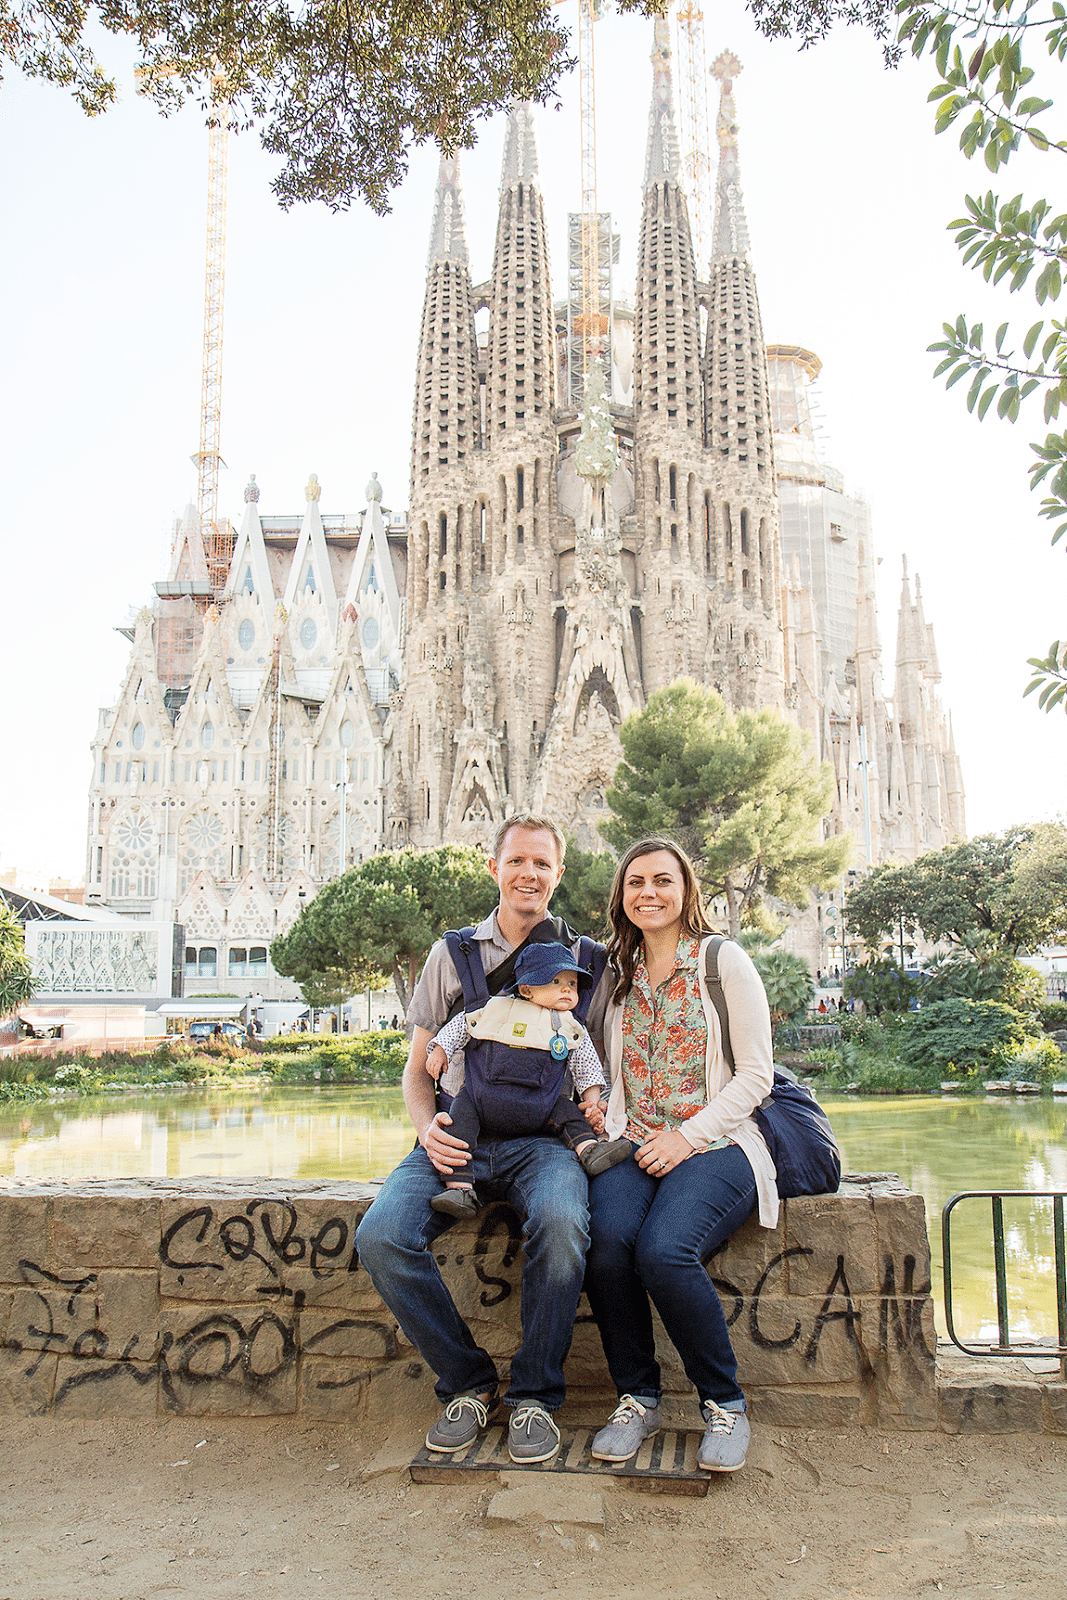 Tips for visiting La Sagrada Familia. 